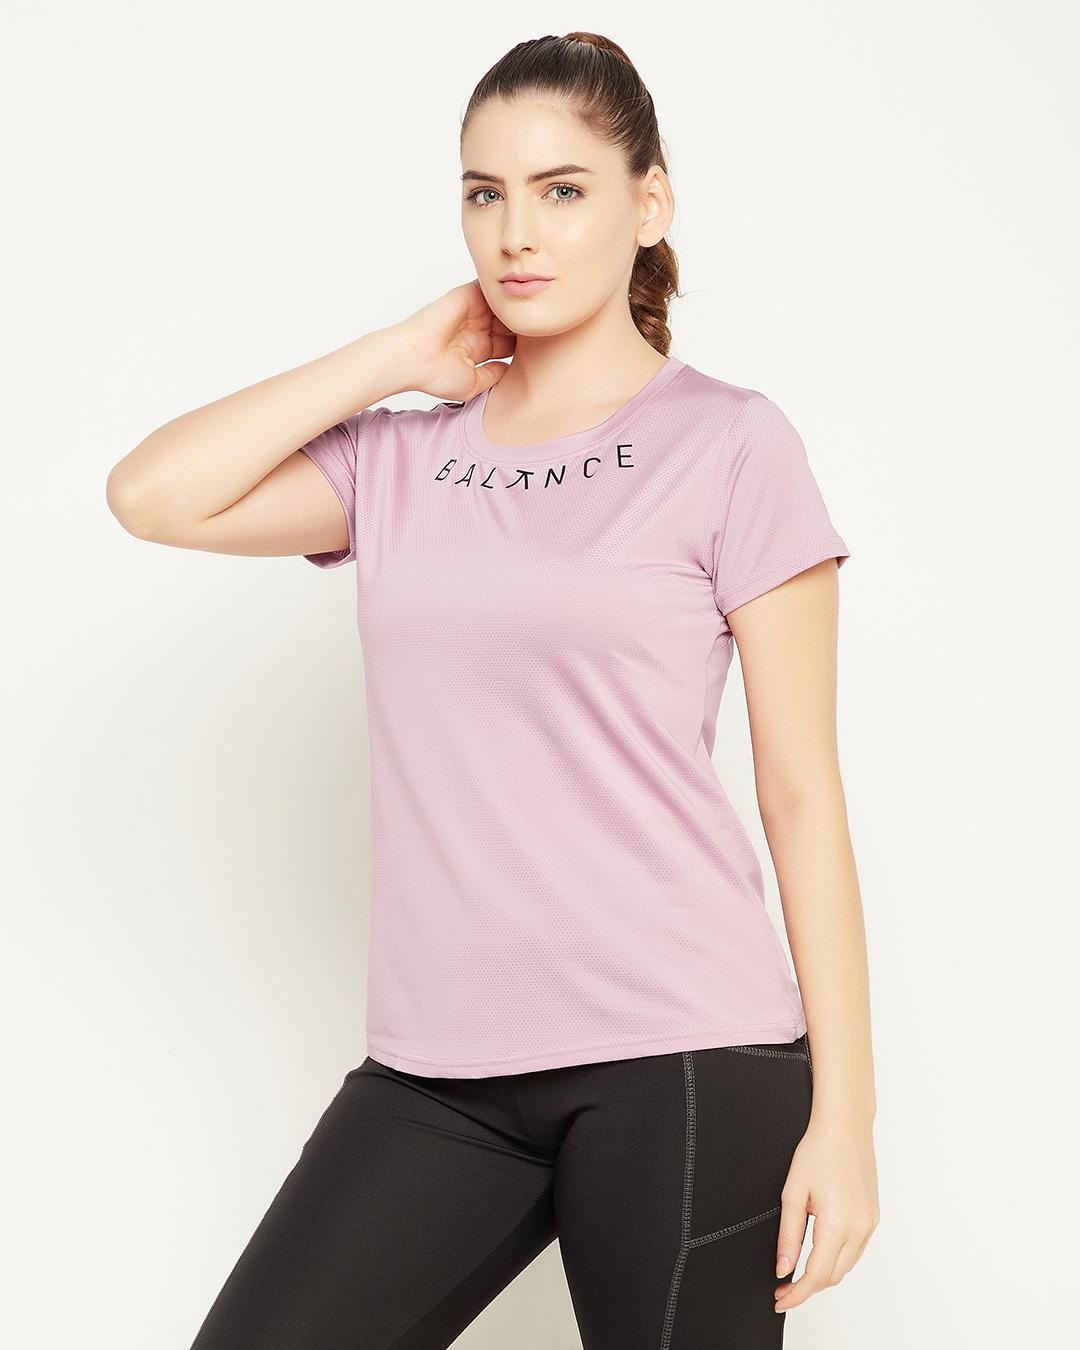 Shop Women's Purple Typographic Activewear T-shirt-Back